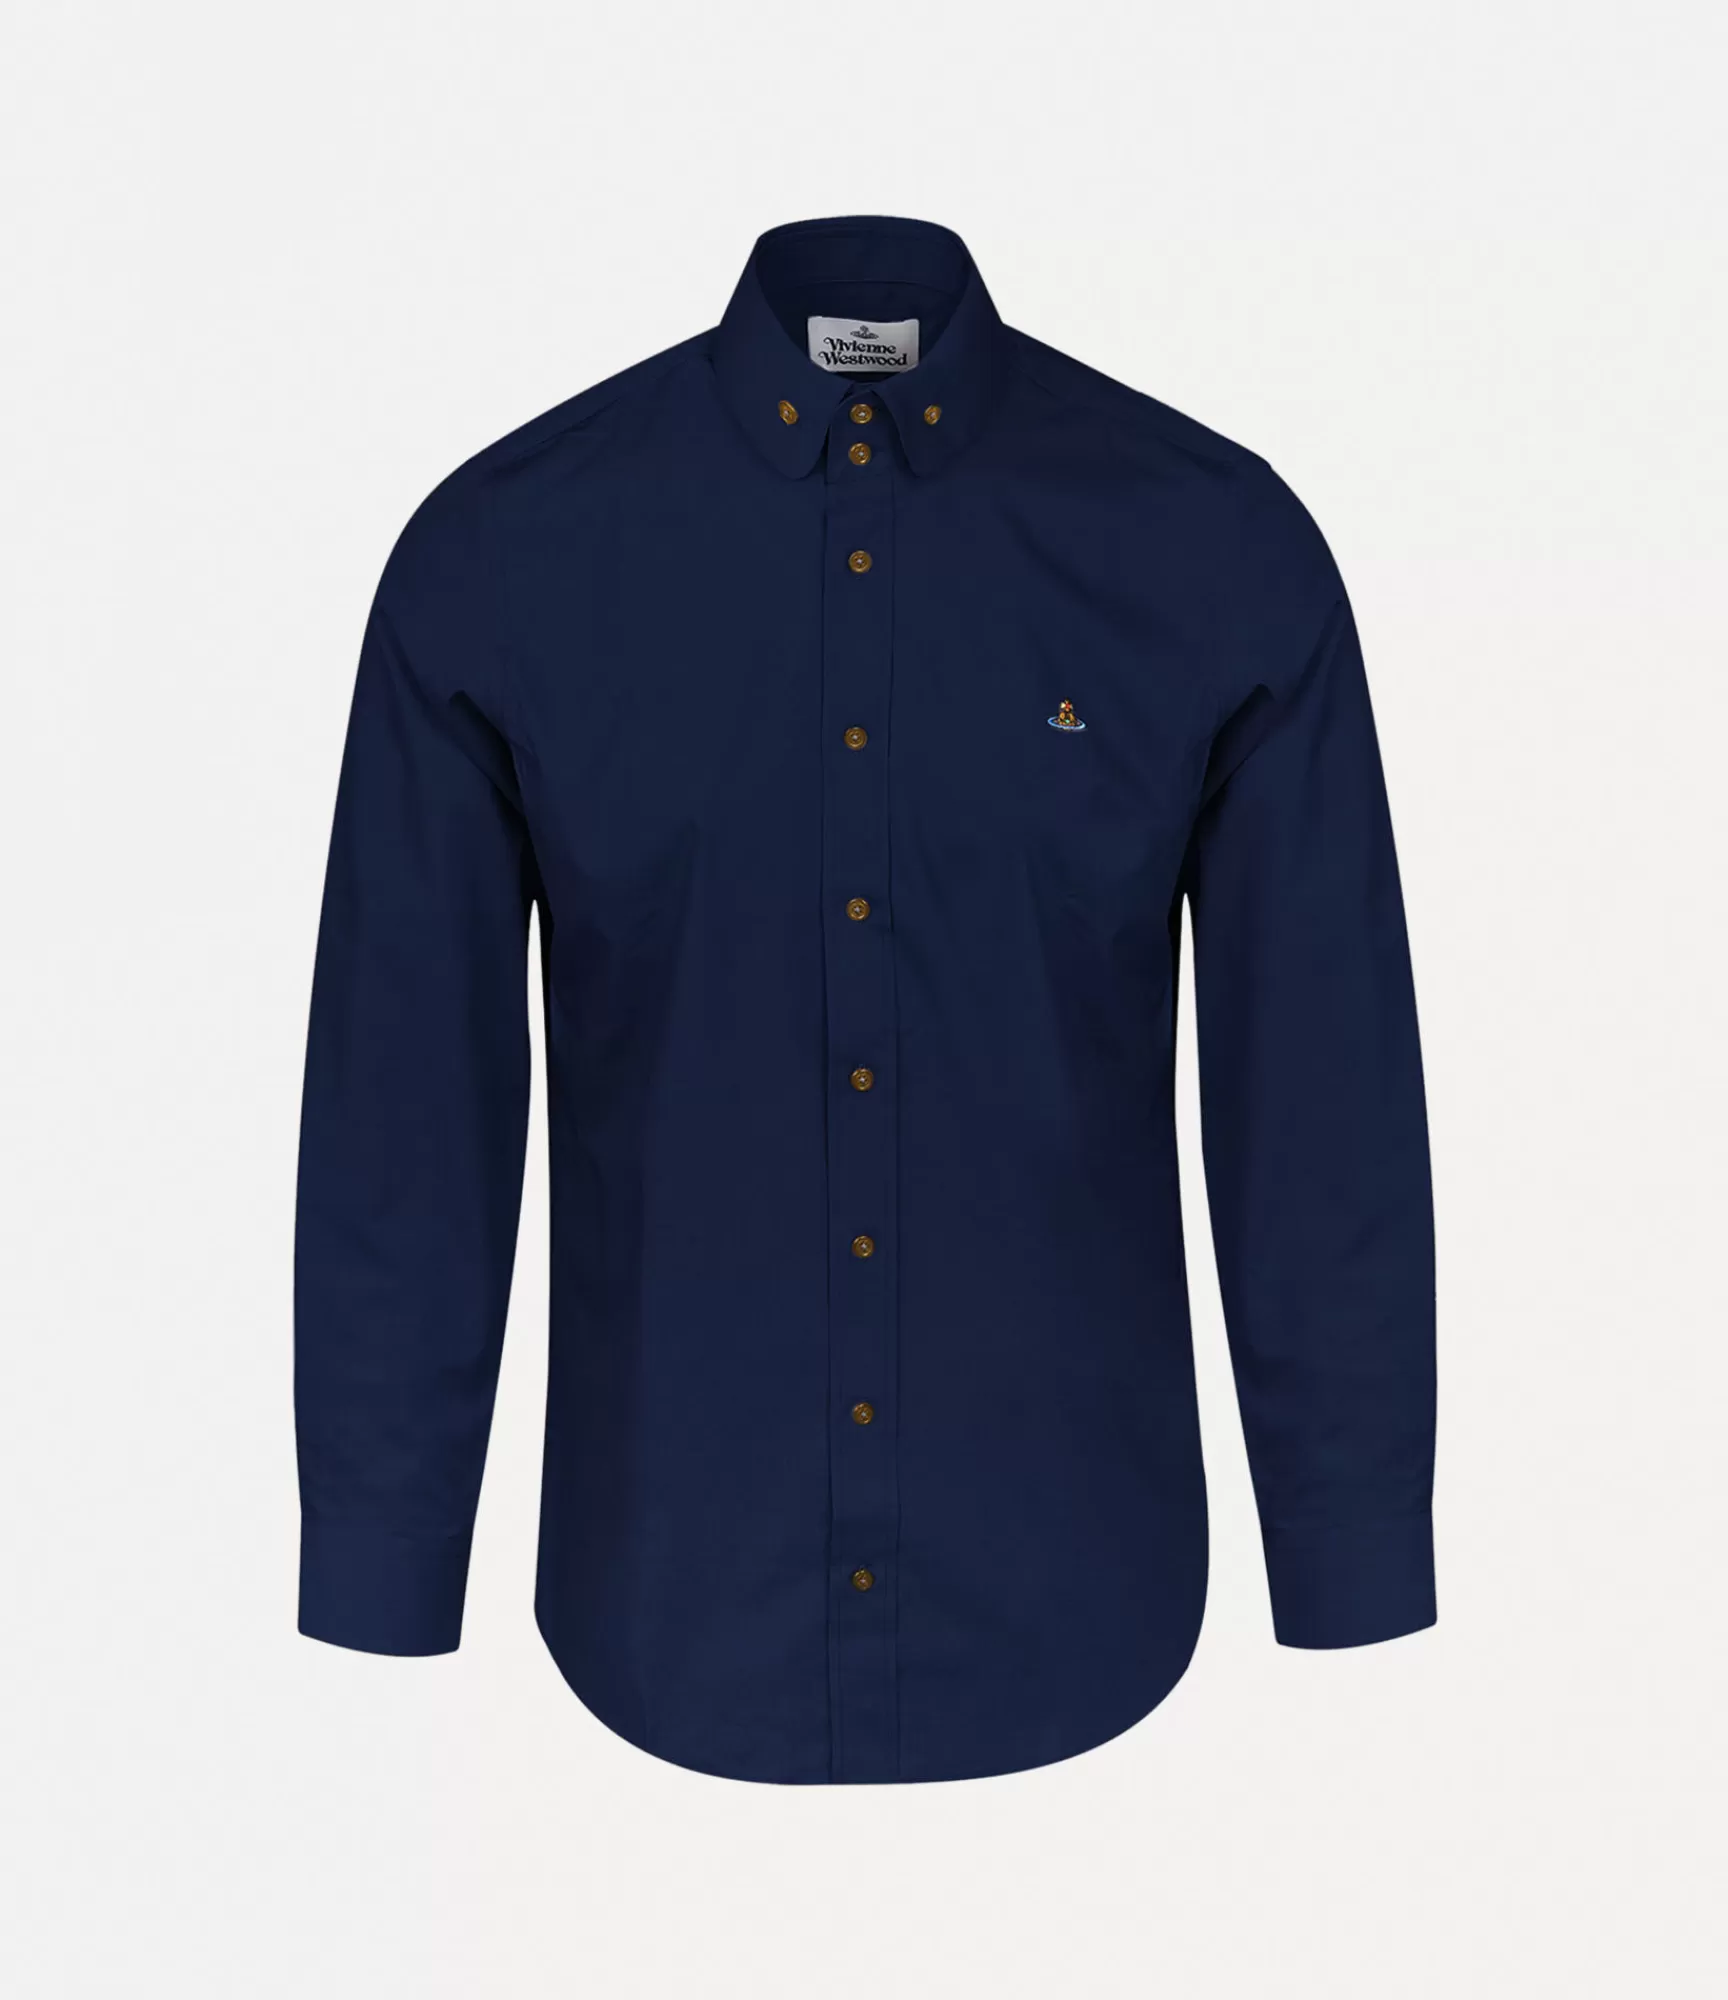 Vivienne Westwood Shirts*2 button krall Navy